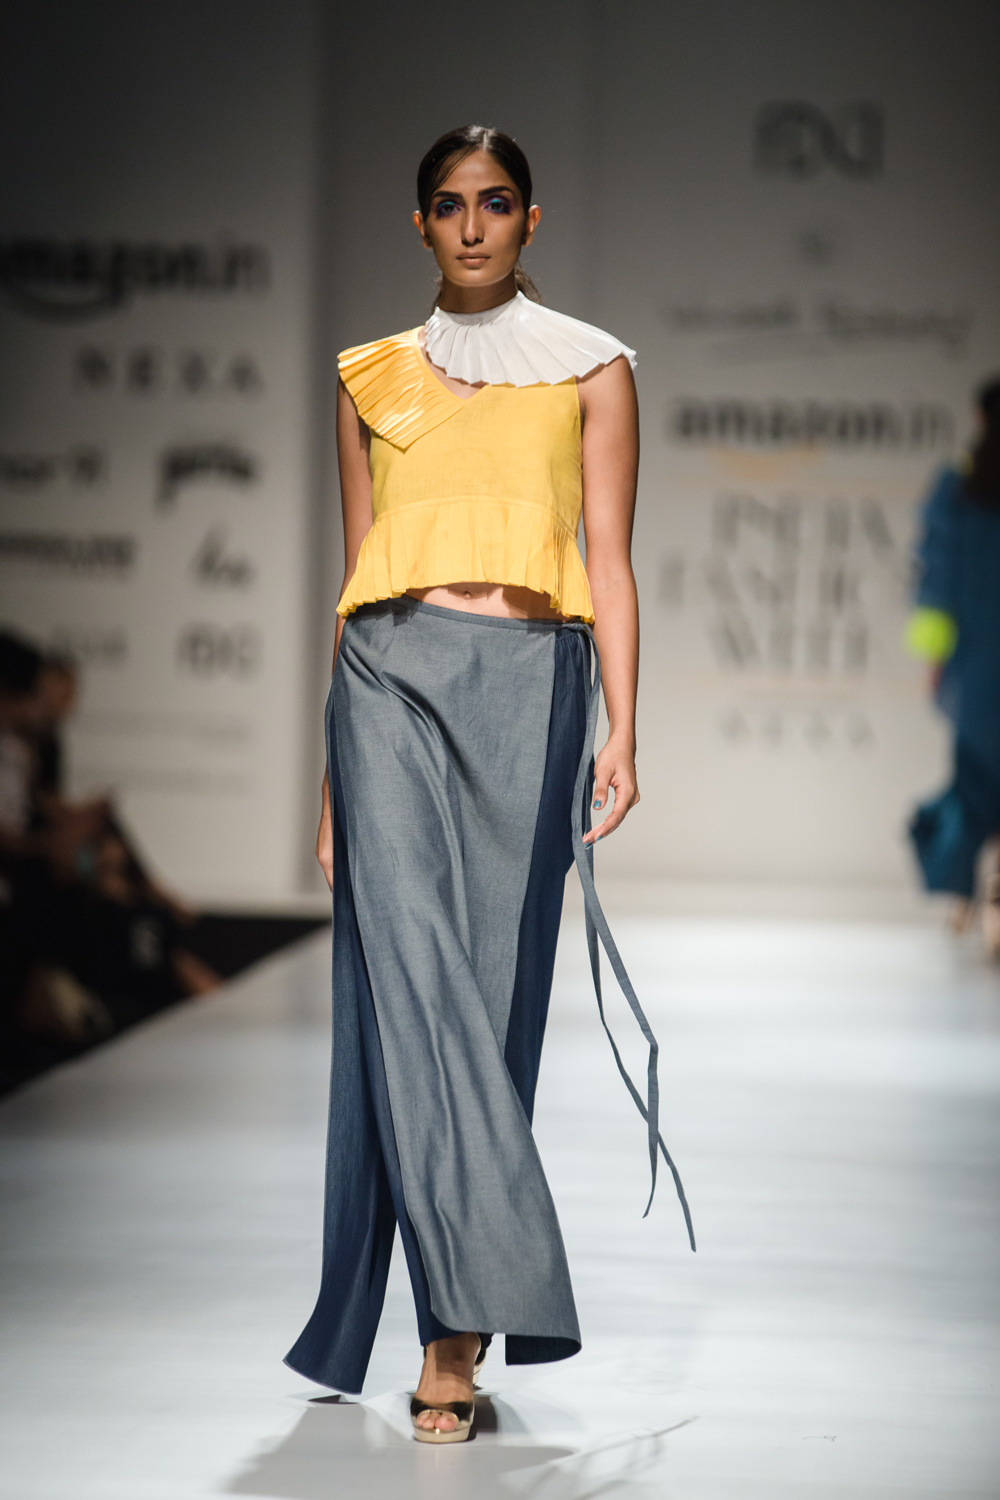 Wendell Rodricks FDCI Amazon India Fashion Week Spring Summer 2018 Look 11